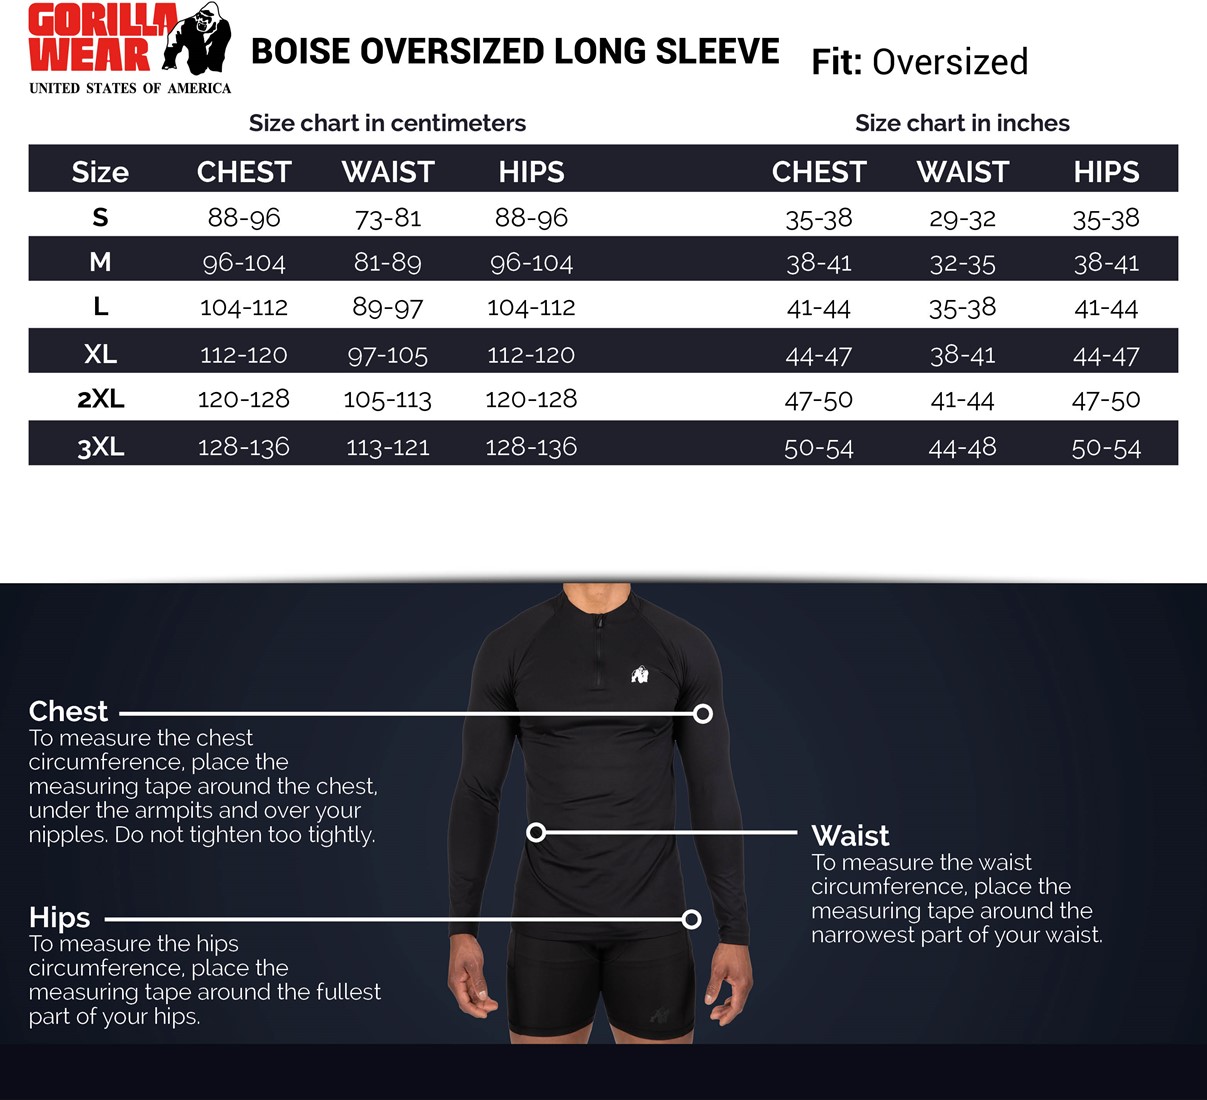 boise-long-sleeve-size-chart